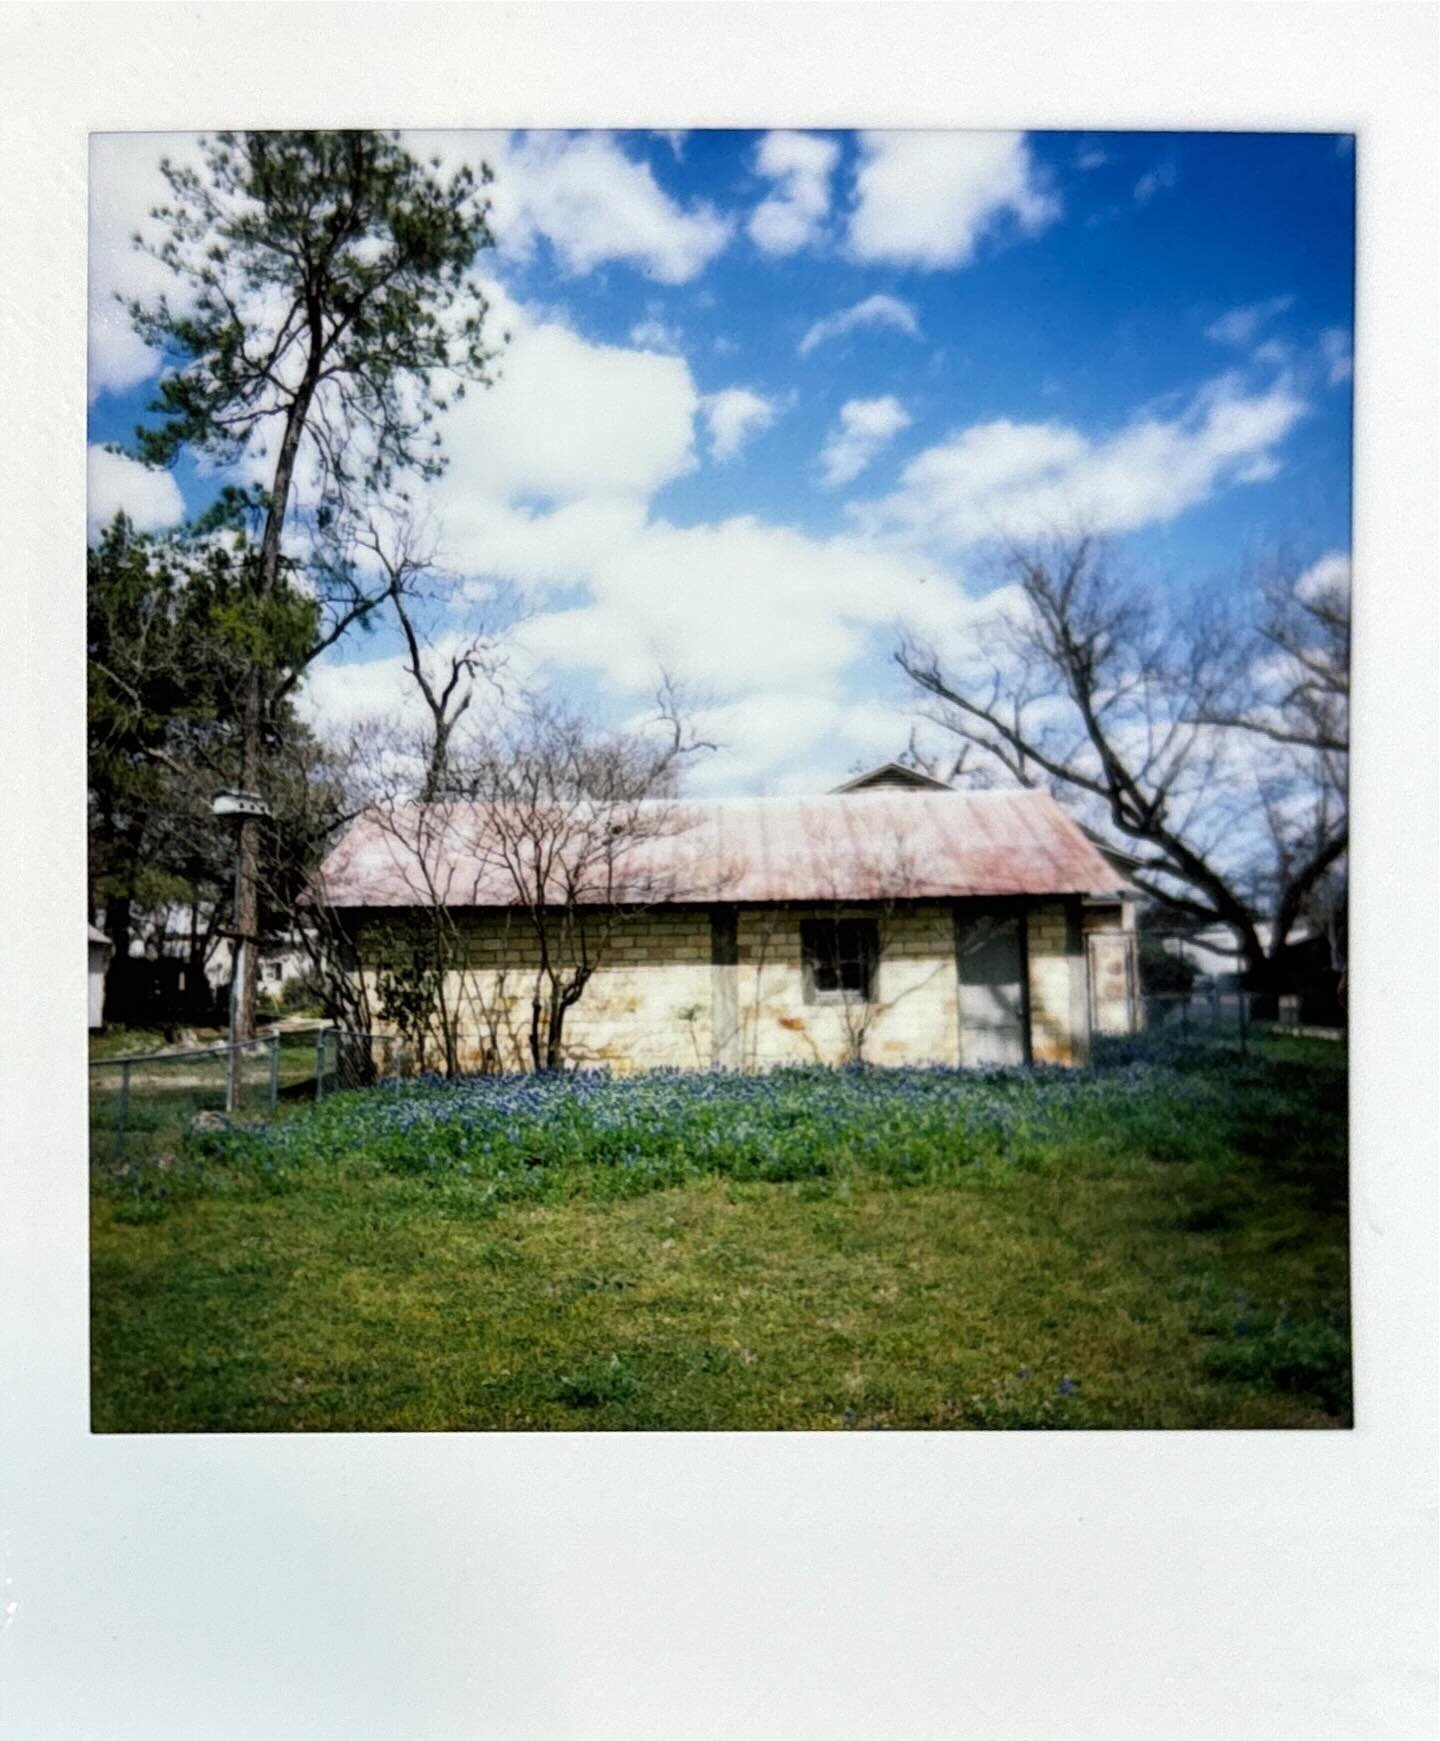 Fredericksburg bluebonnets 💙 

//
#spring #texas #fredericksburg #roadtrip  #bluebonnets #wildflowers #film #instantfilm #fujifilm #instaxsquare #filmshooterscollective #texasgirlphotography